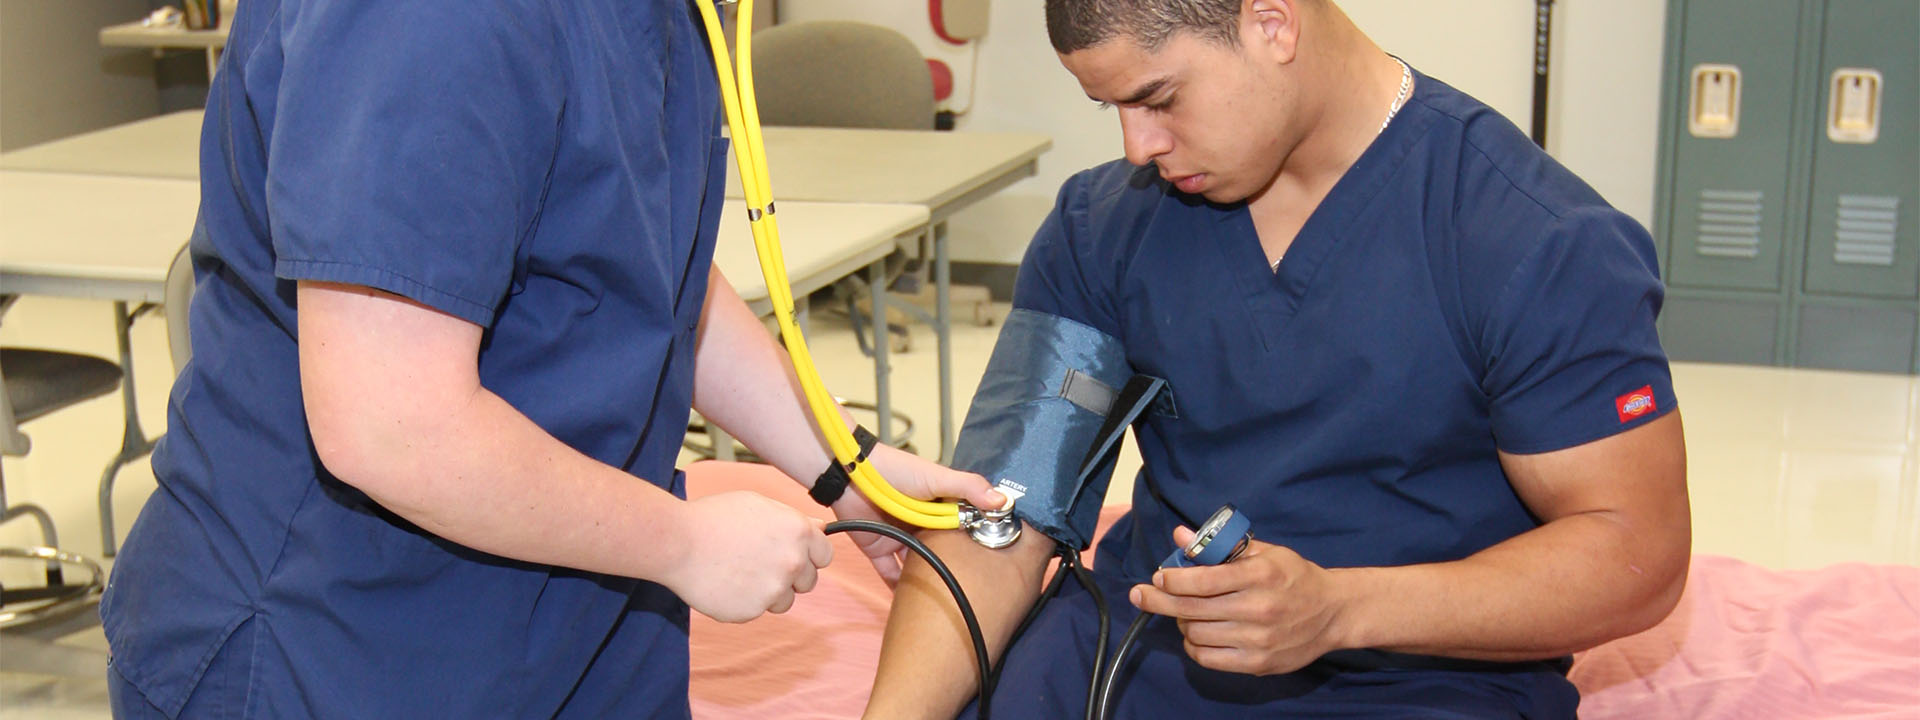 Students practicing measuring blood pressure